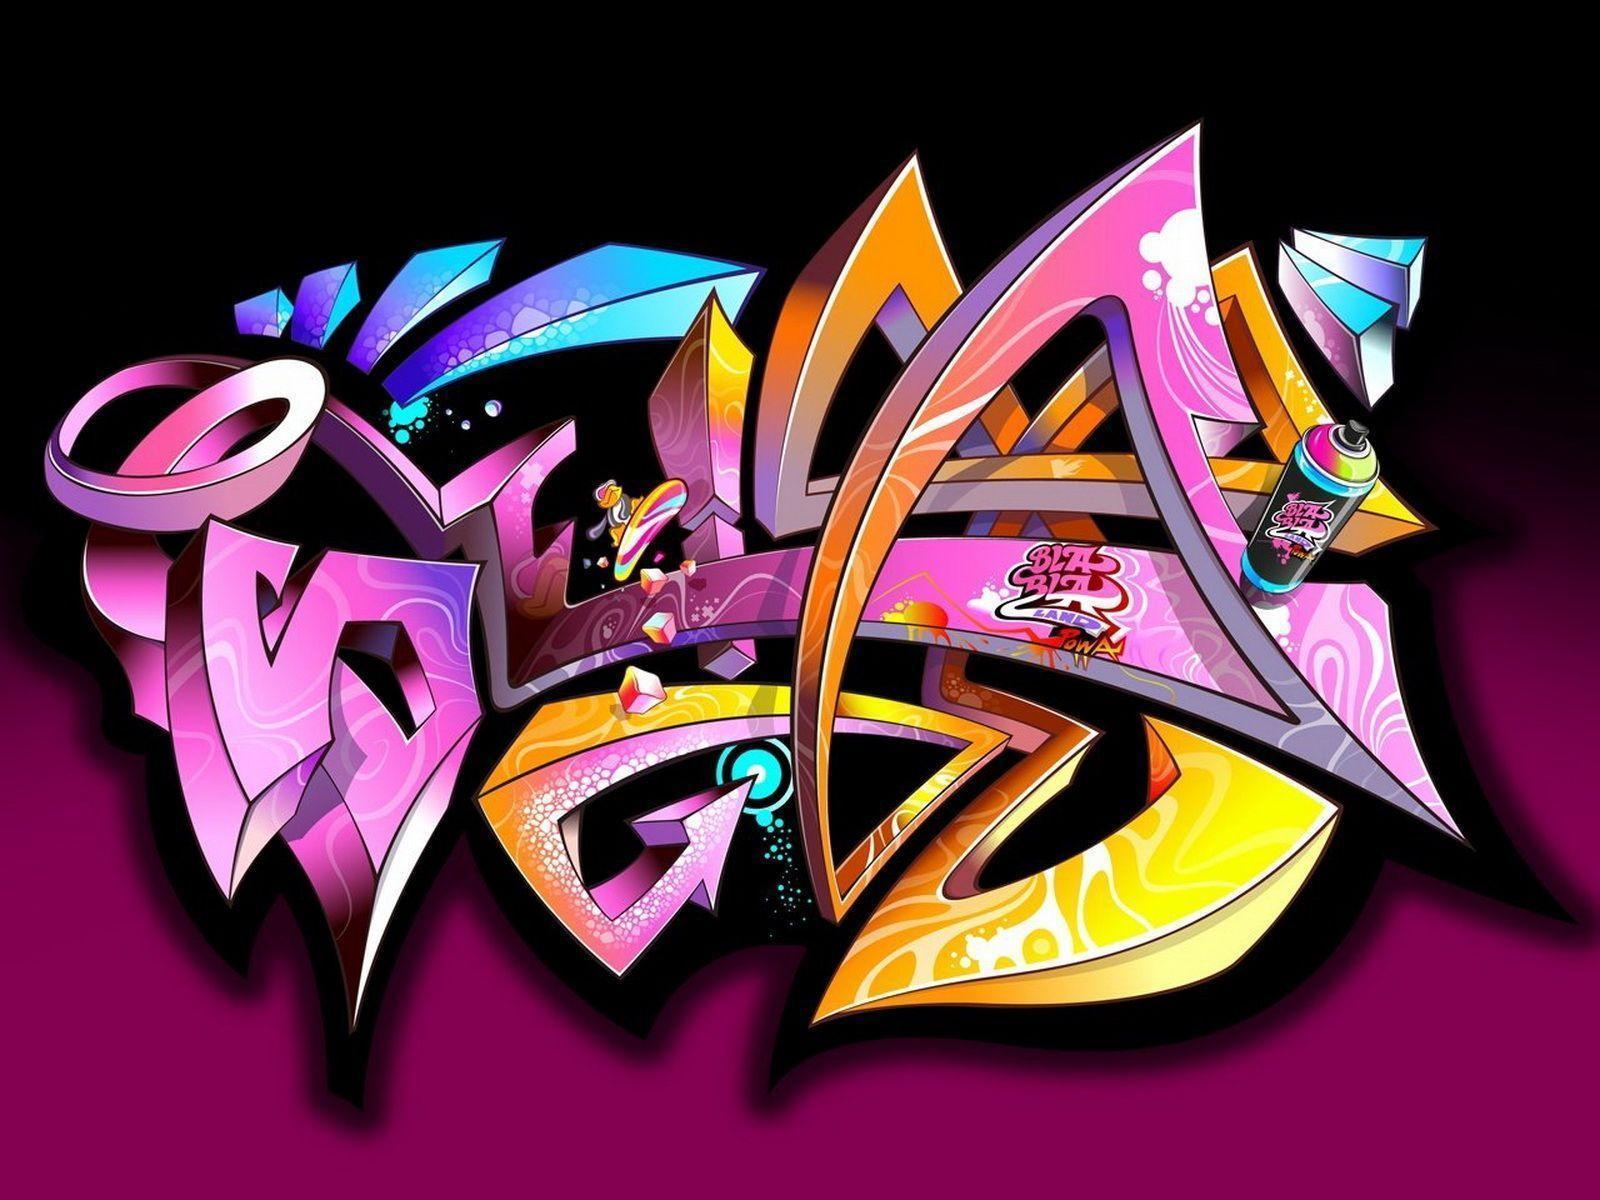 3D Graffiti Wallpaper 145 Wallpaper HD. colourinwallpaper